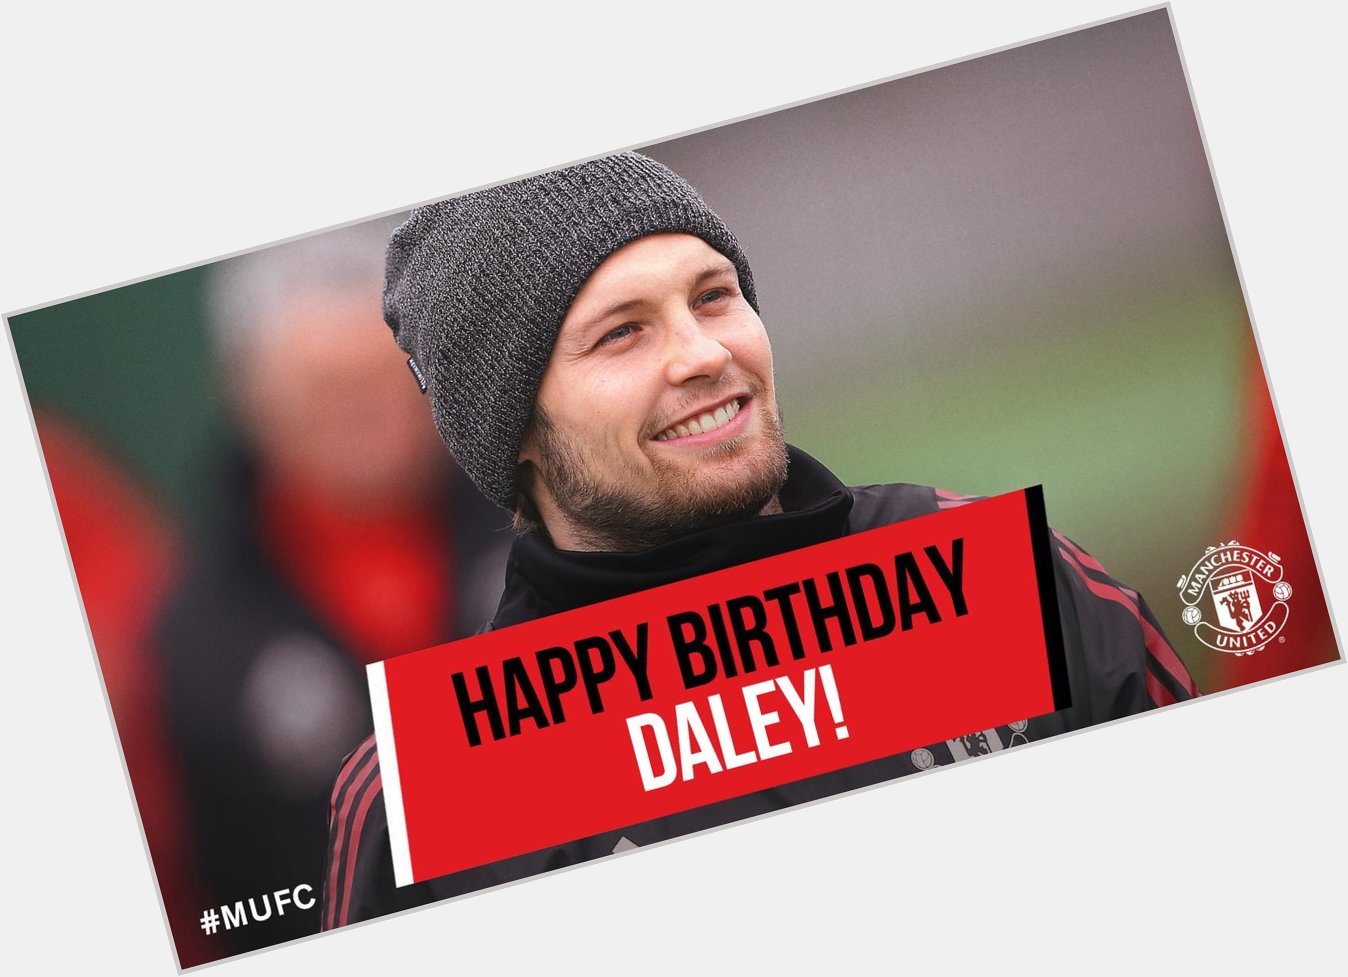 We wan wish Daley Blind Happy Birthday!    